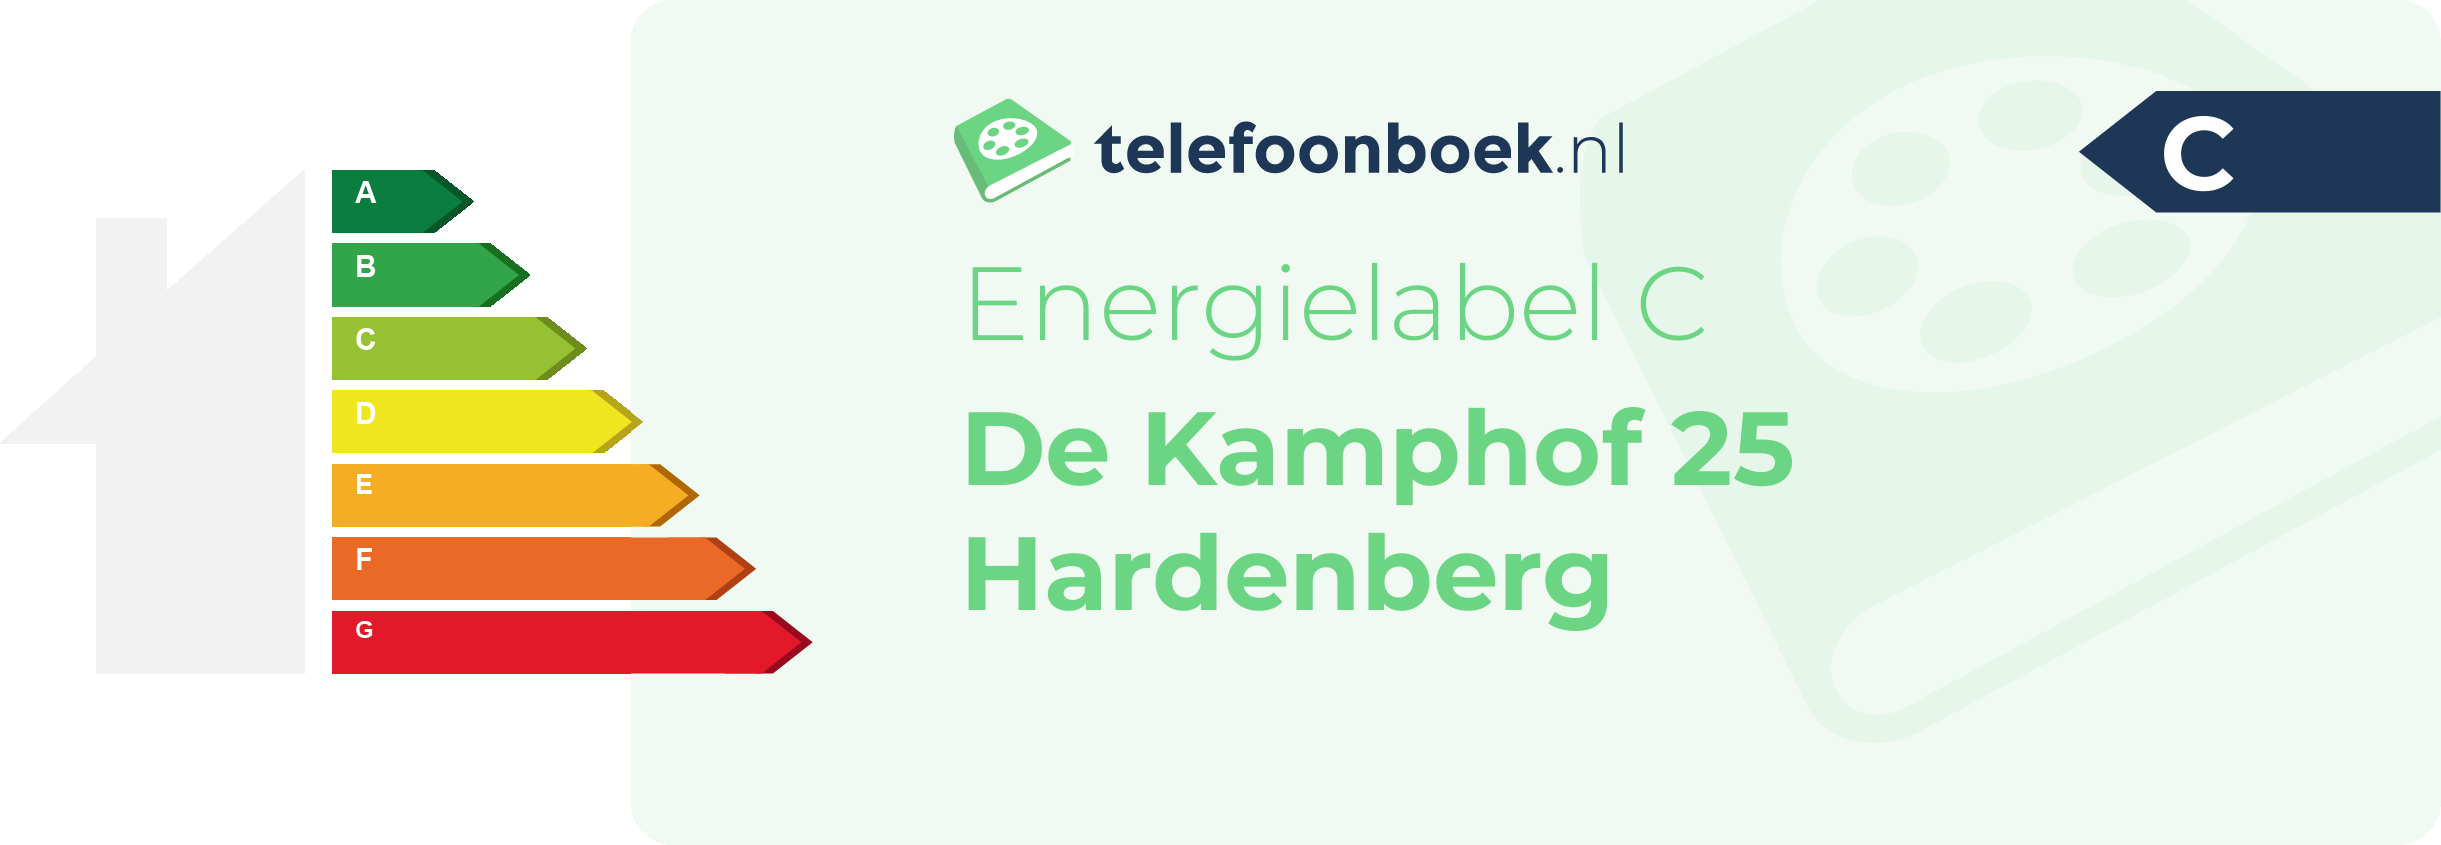 Energielabel De Kamphof 25 Hardenberg